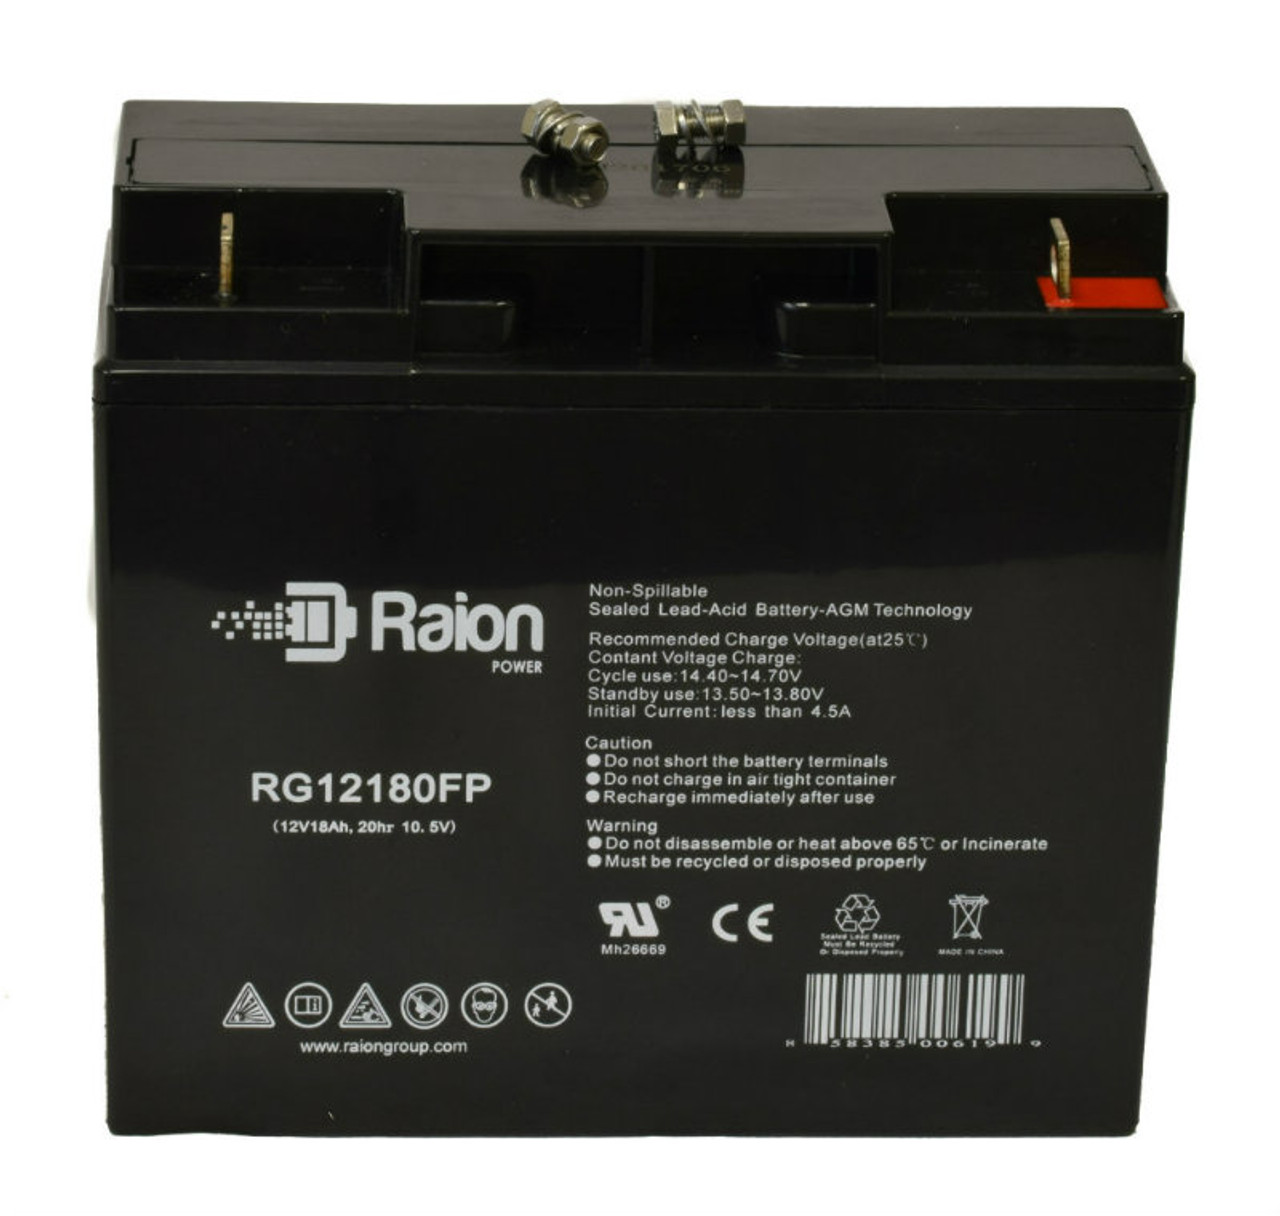 Raion Power RG12180FP 12V 18Ah Lead Acid Battery for KGEEZ Cycle DUKE 500